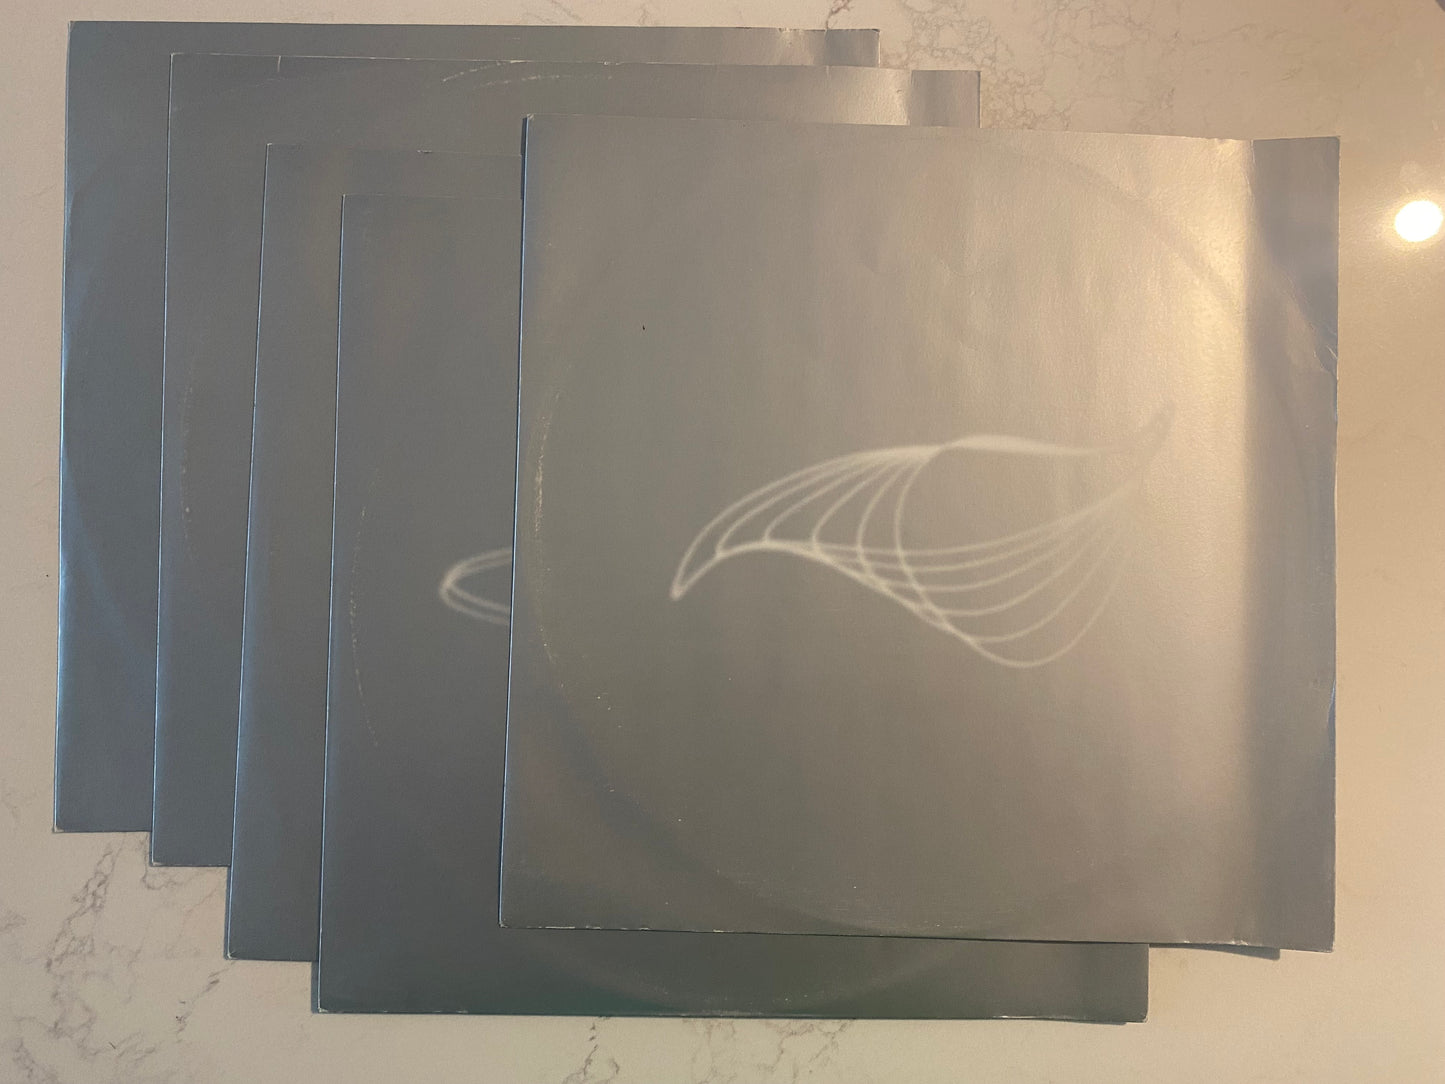 Roni Size / Reprazent - New Forms (5x12", Album) (L)